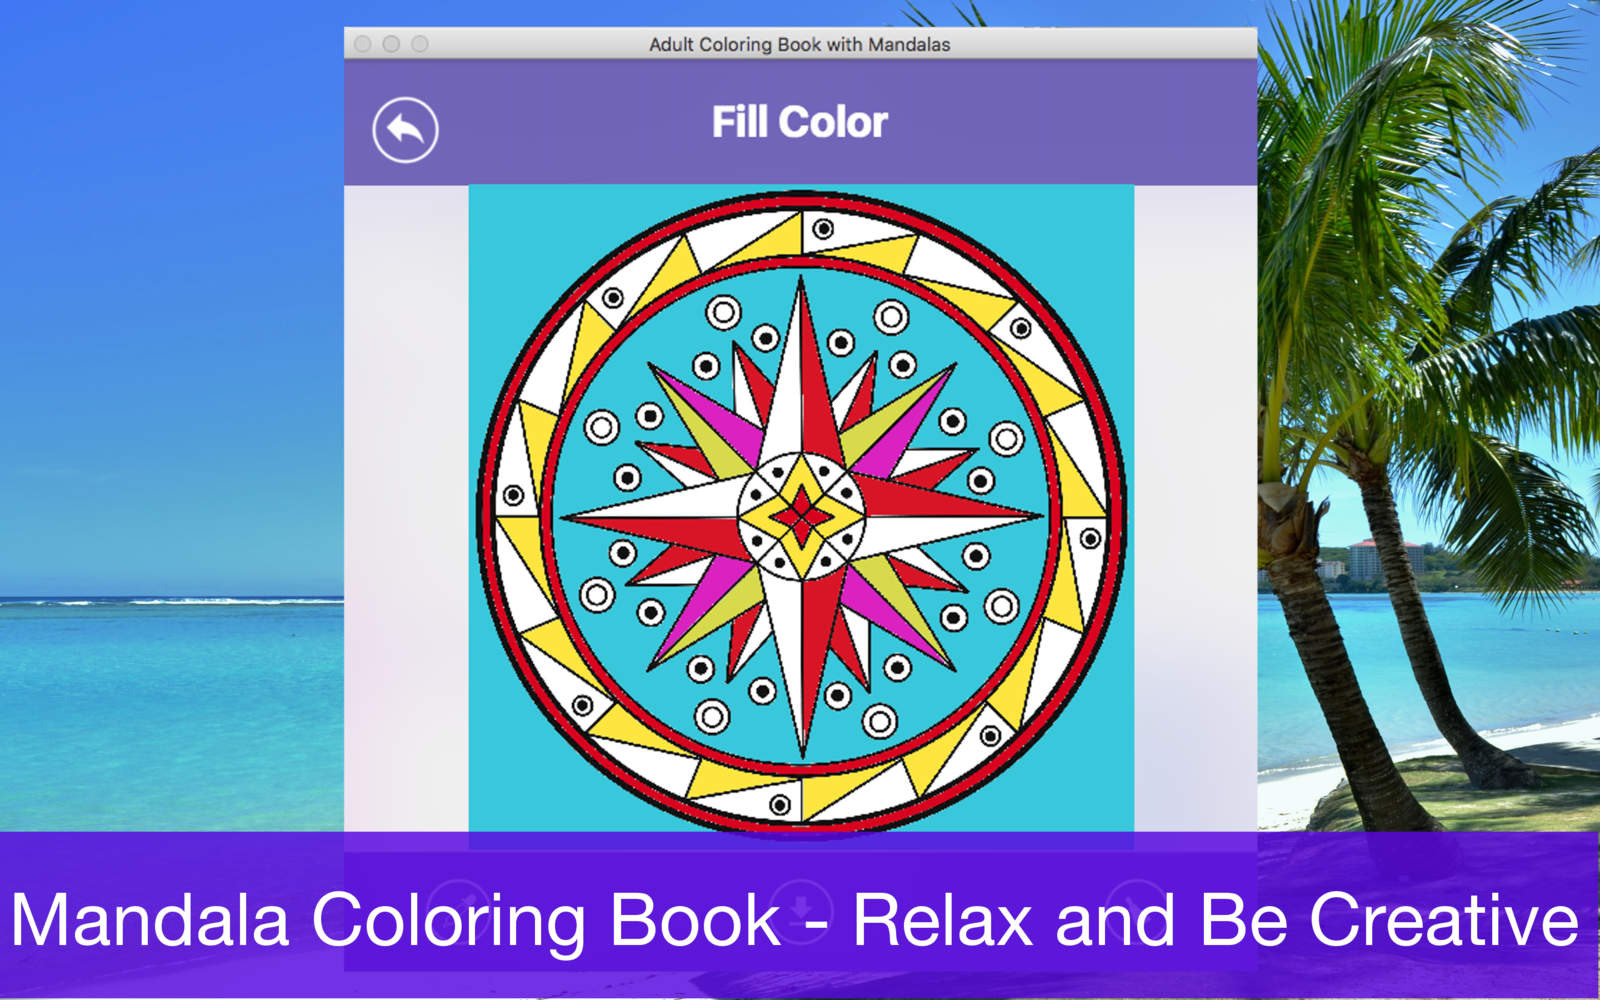 Adult Coloring Book with Mandalas 1.0 : Main Window